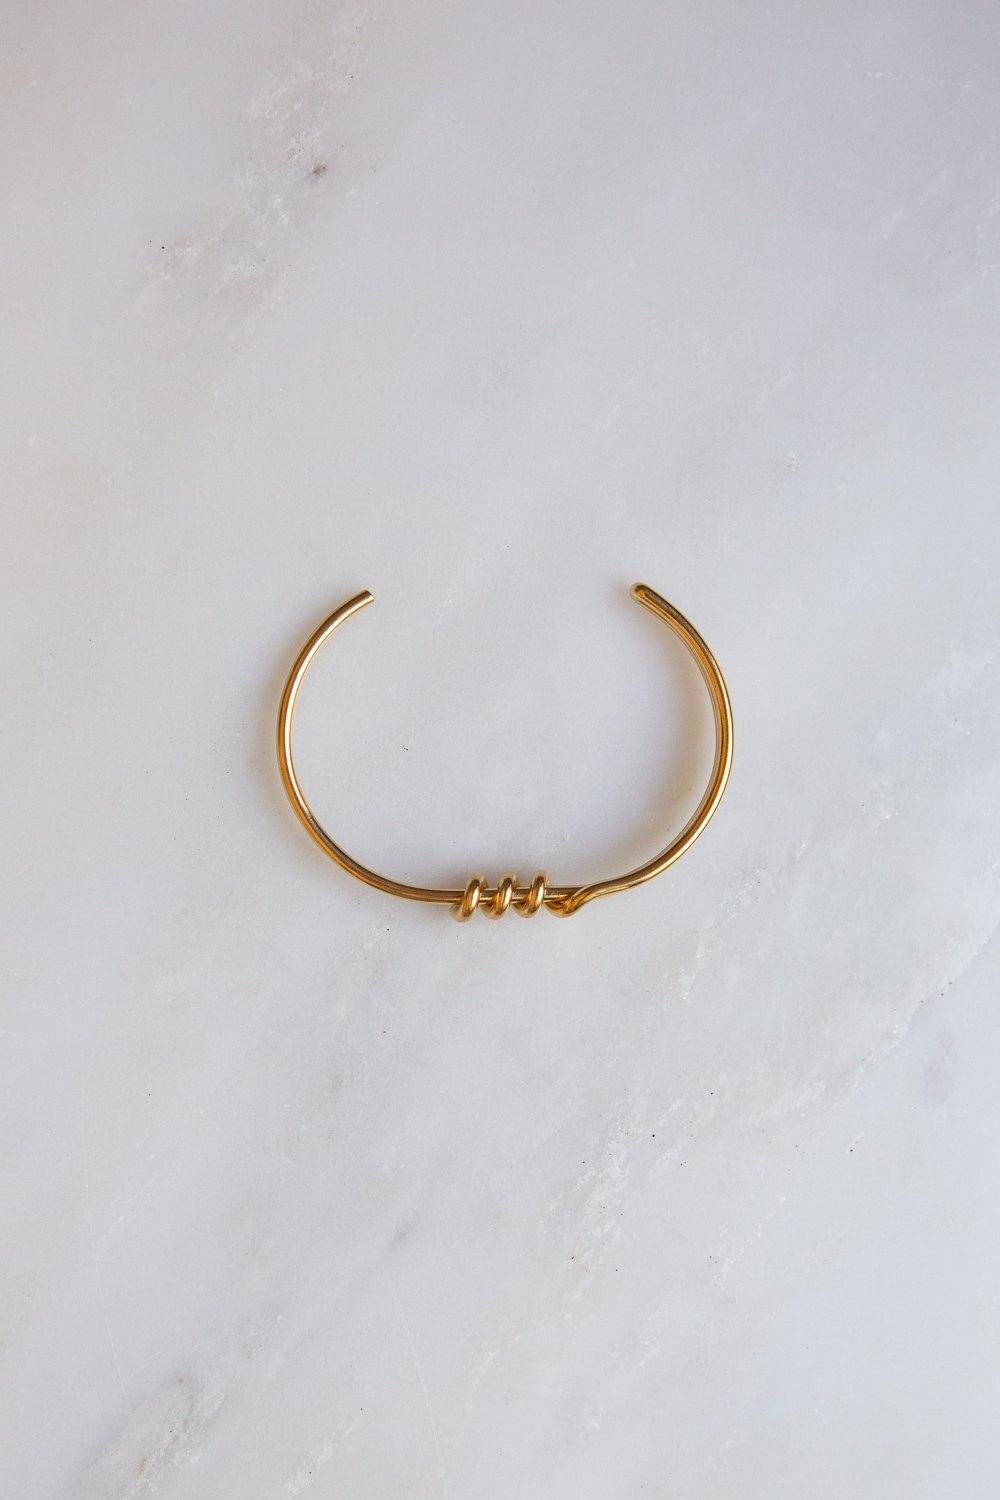 Minimalist Gold Wire Twist Cuff Bracelet - Wynter Bloom